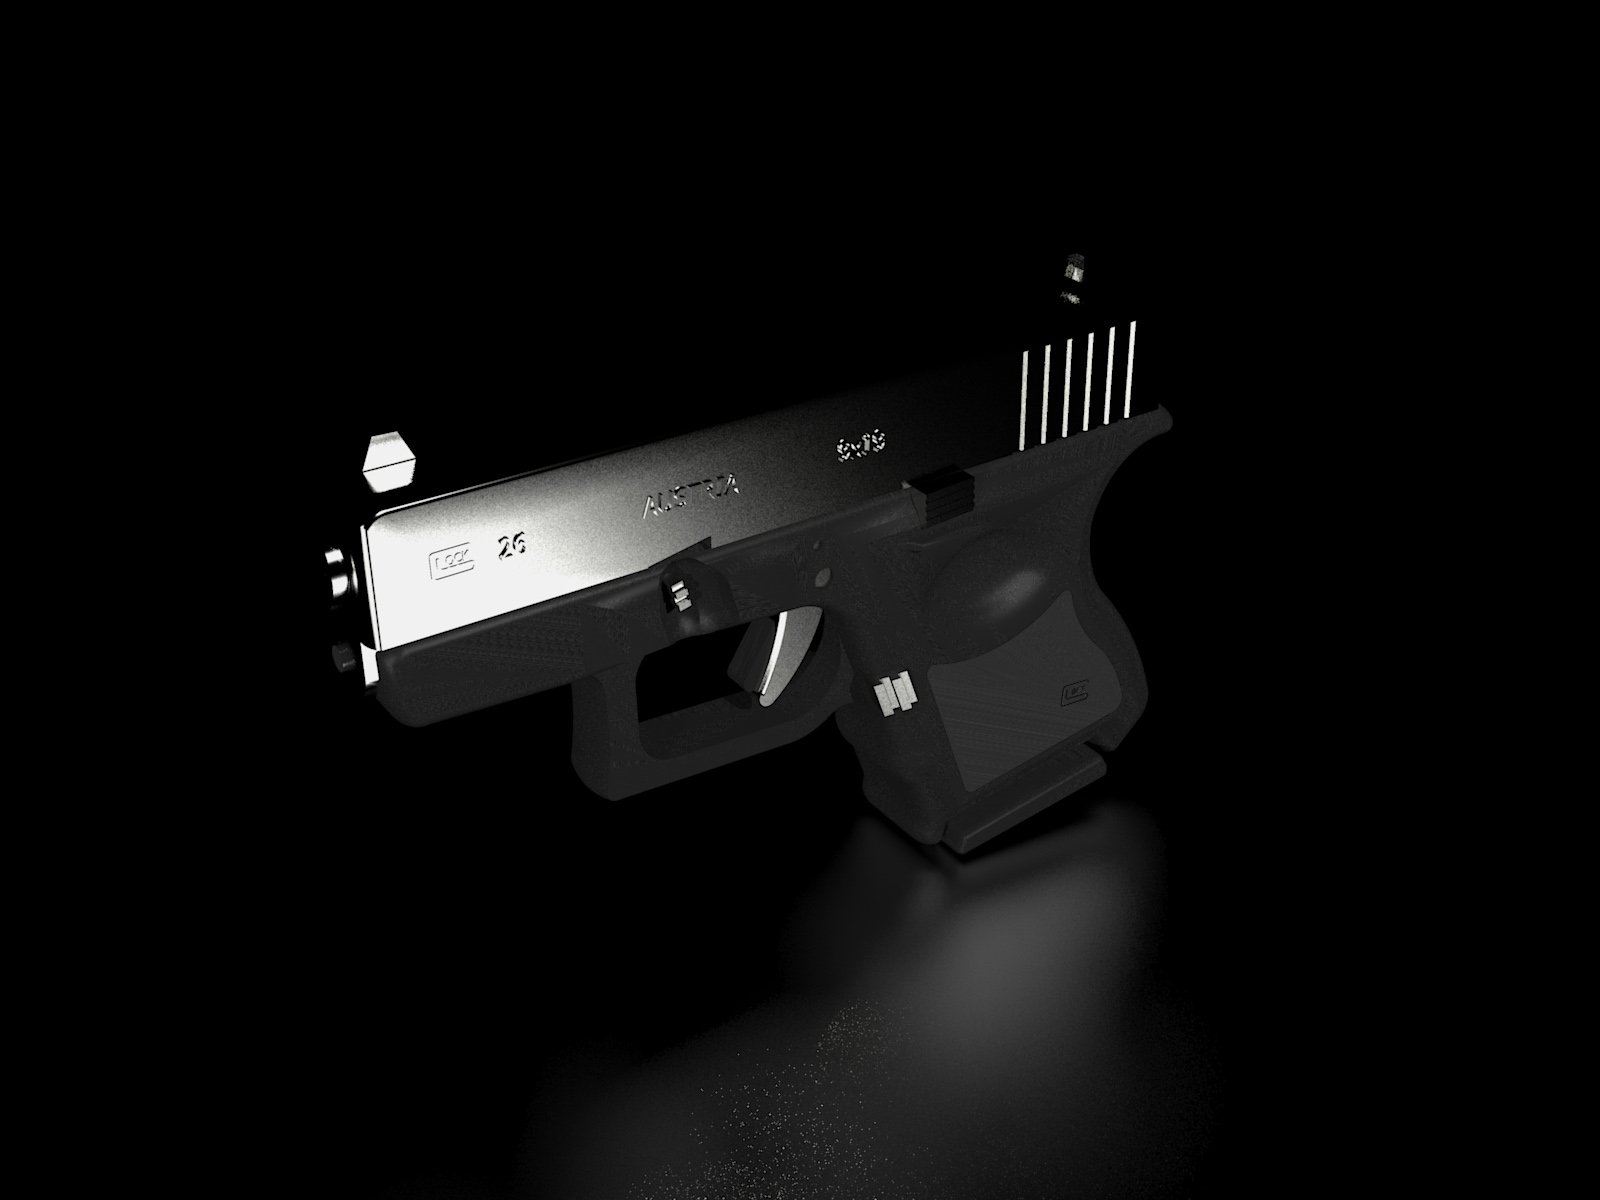 HD Glock Gun Image Wallpaper In High Resolution For